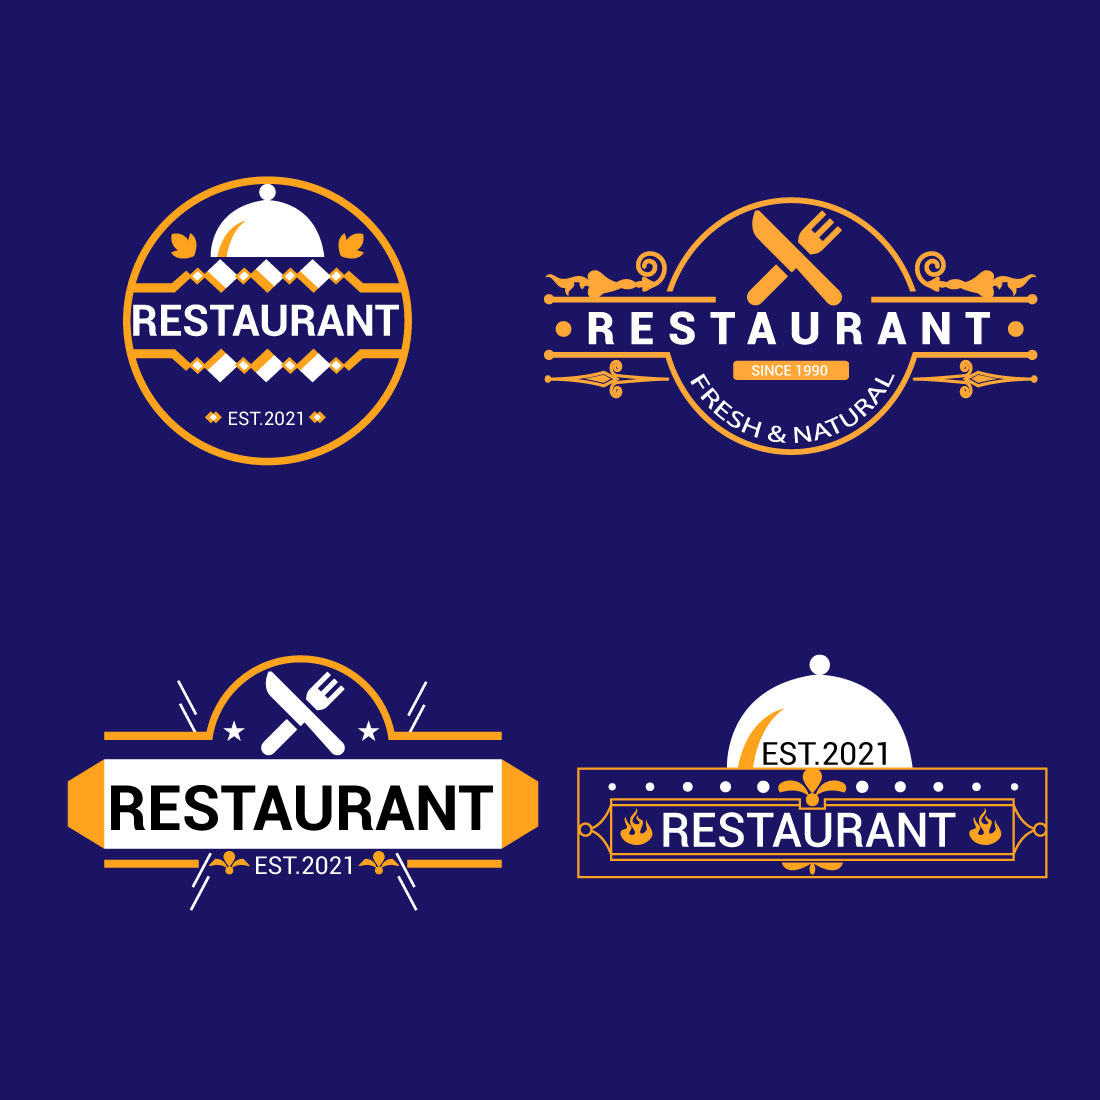 Restaurant logo vintage And retro Vector Bundle preview image.